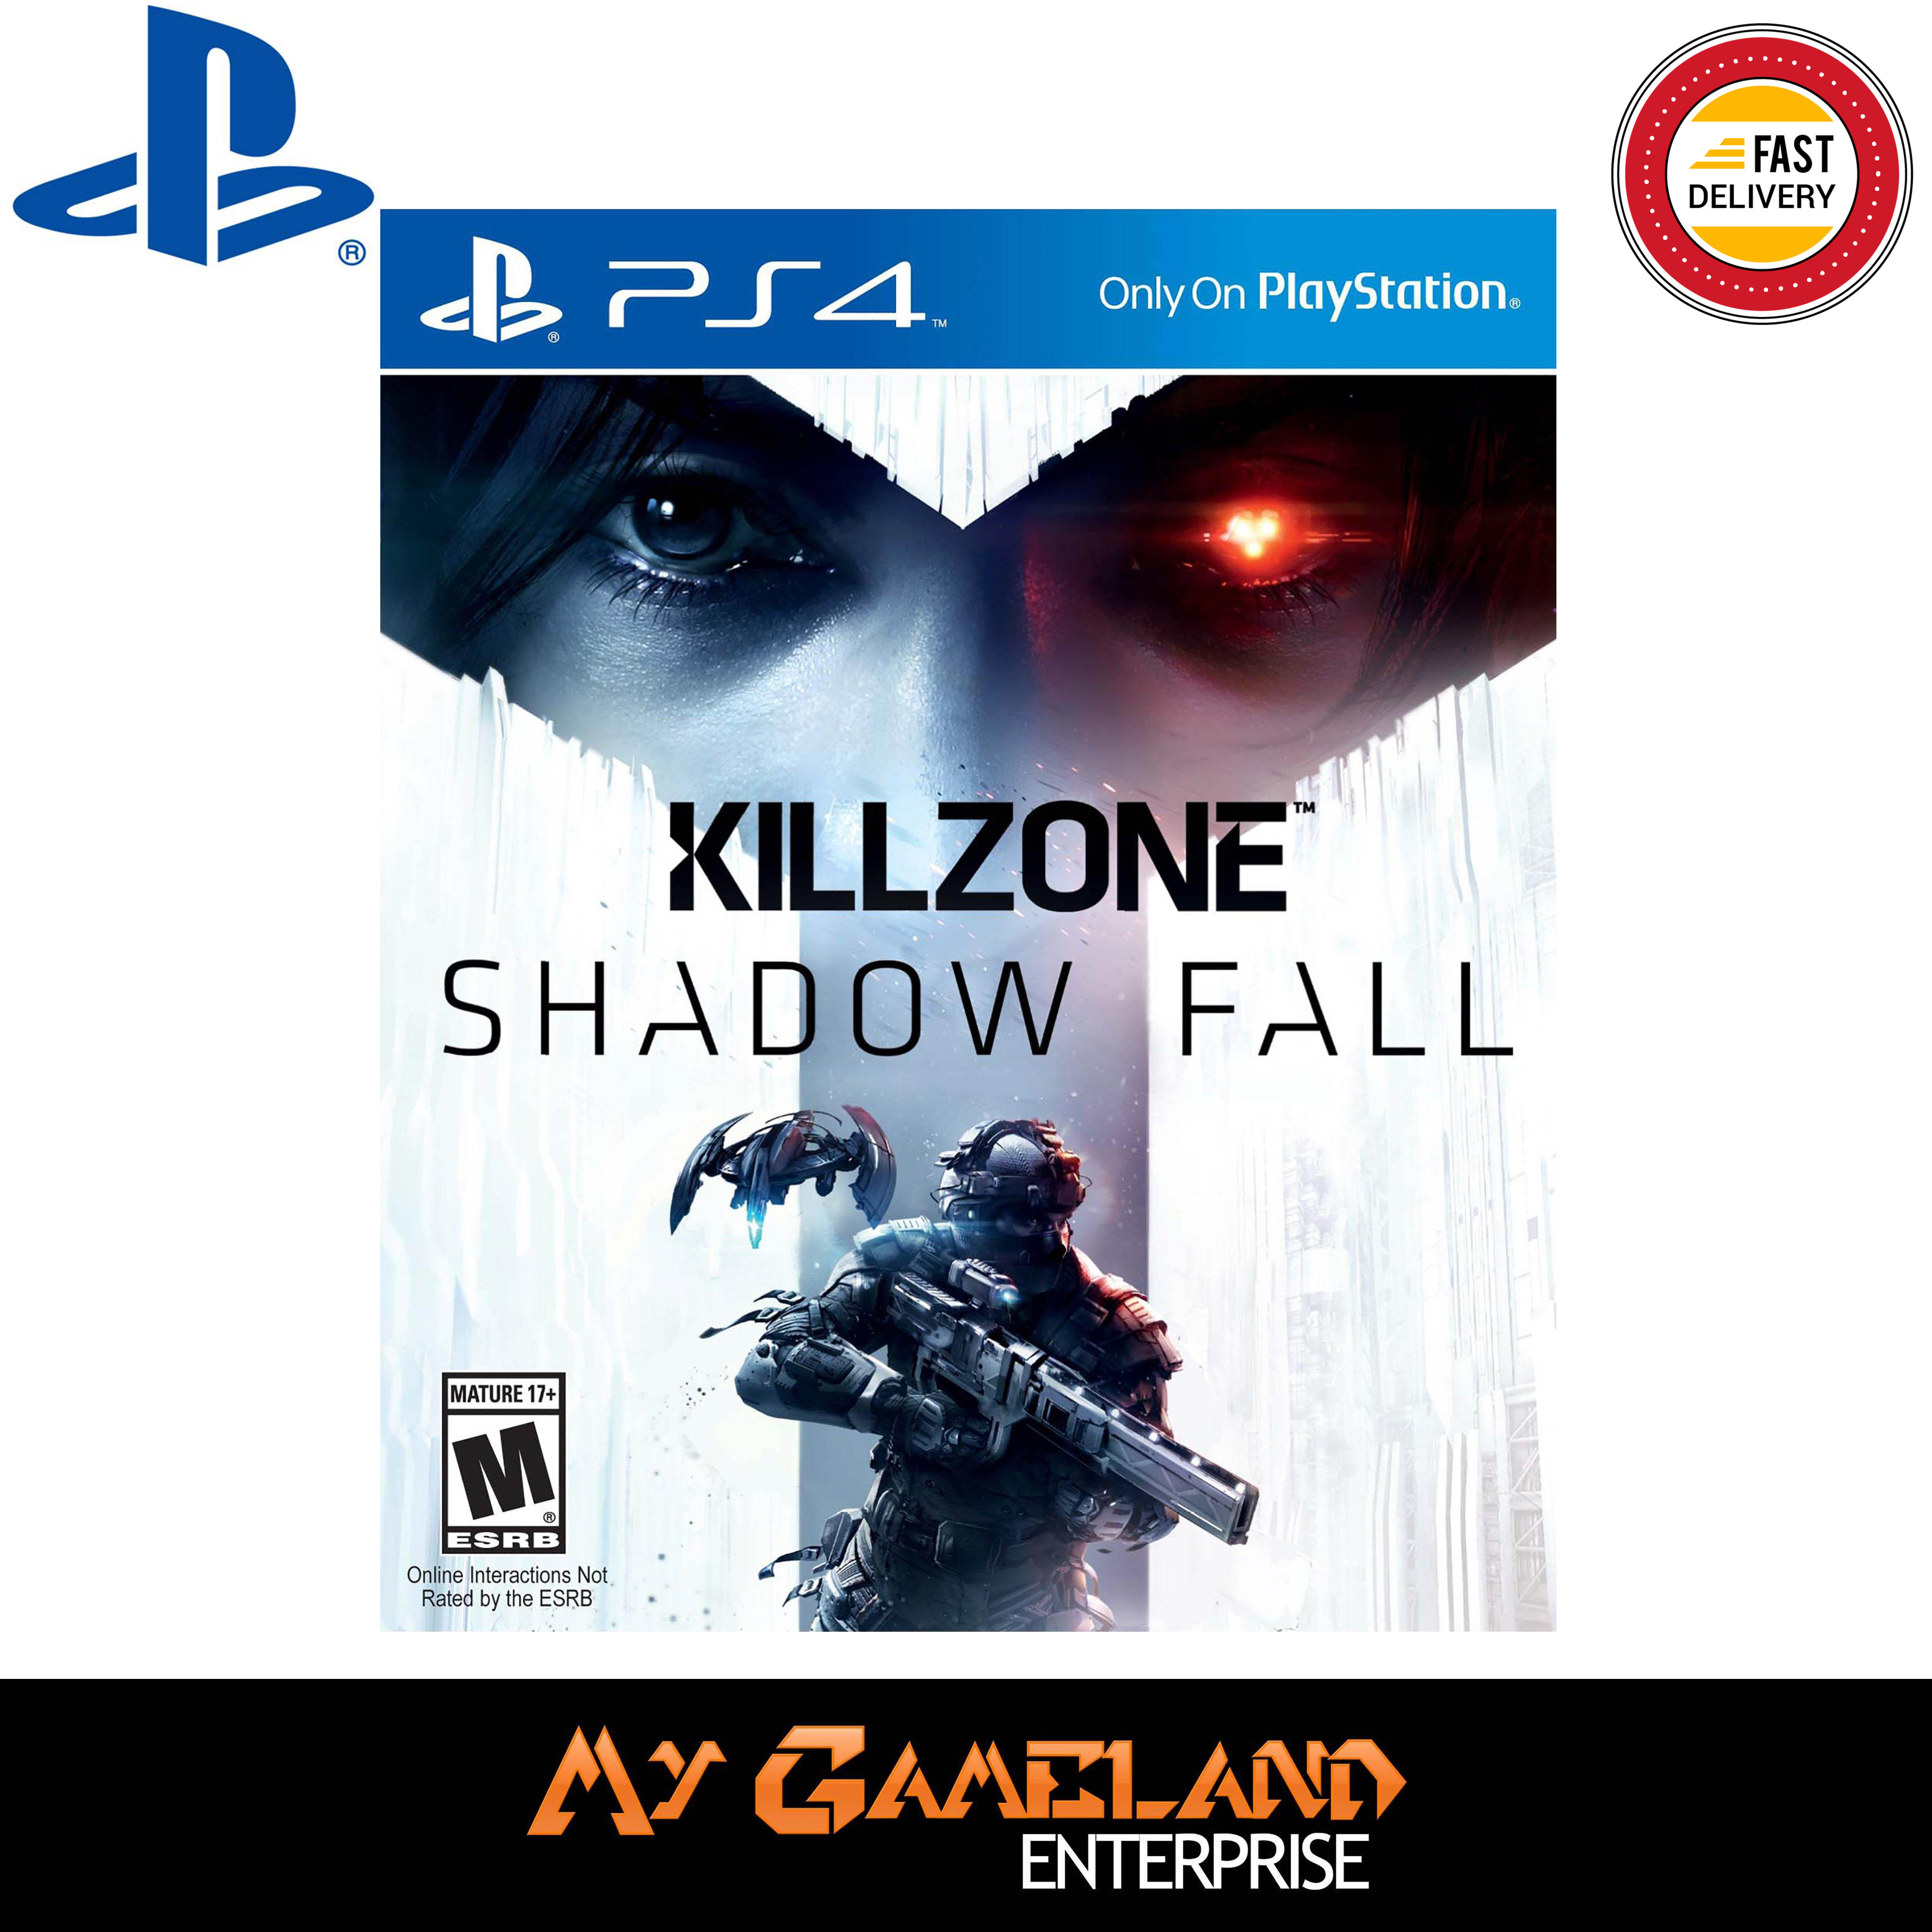 PS5 - KILLZONE SHADOW FALL (INGLES) - Game-Heat®